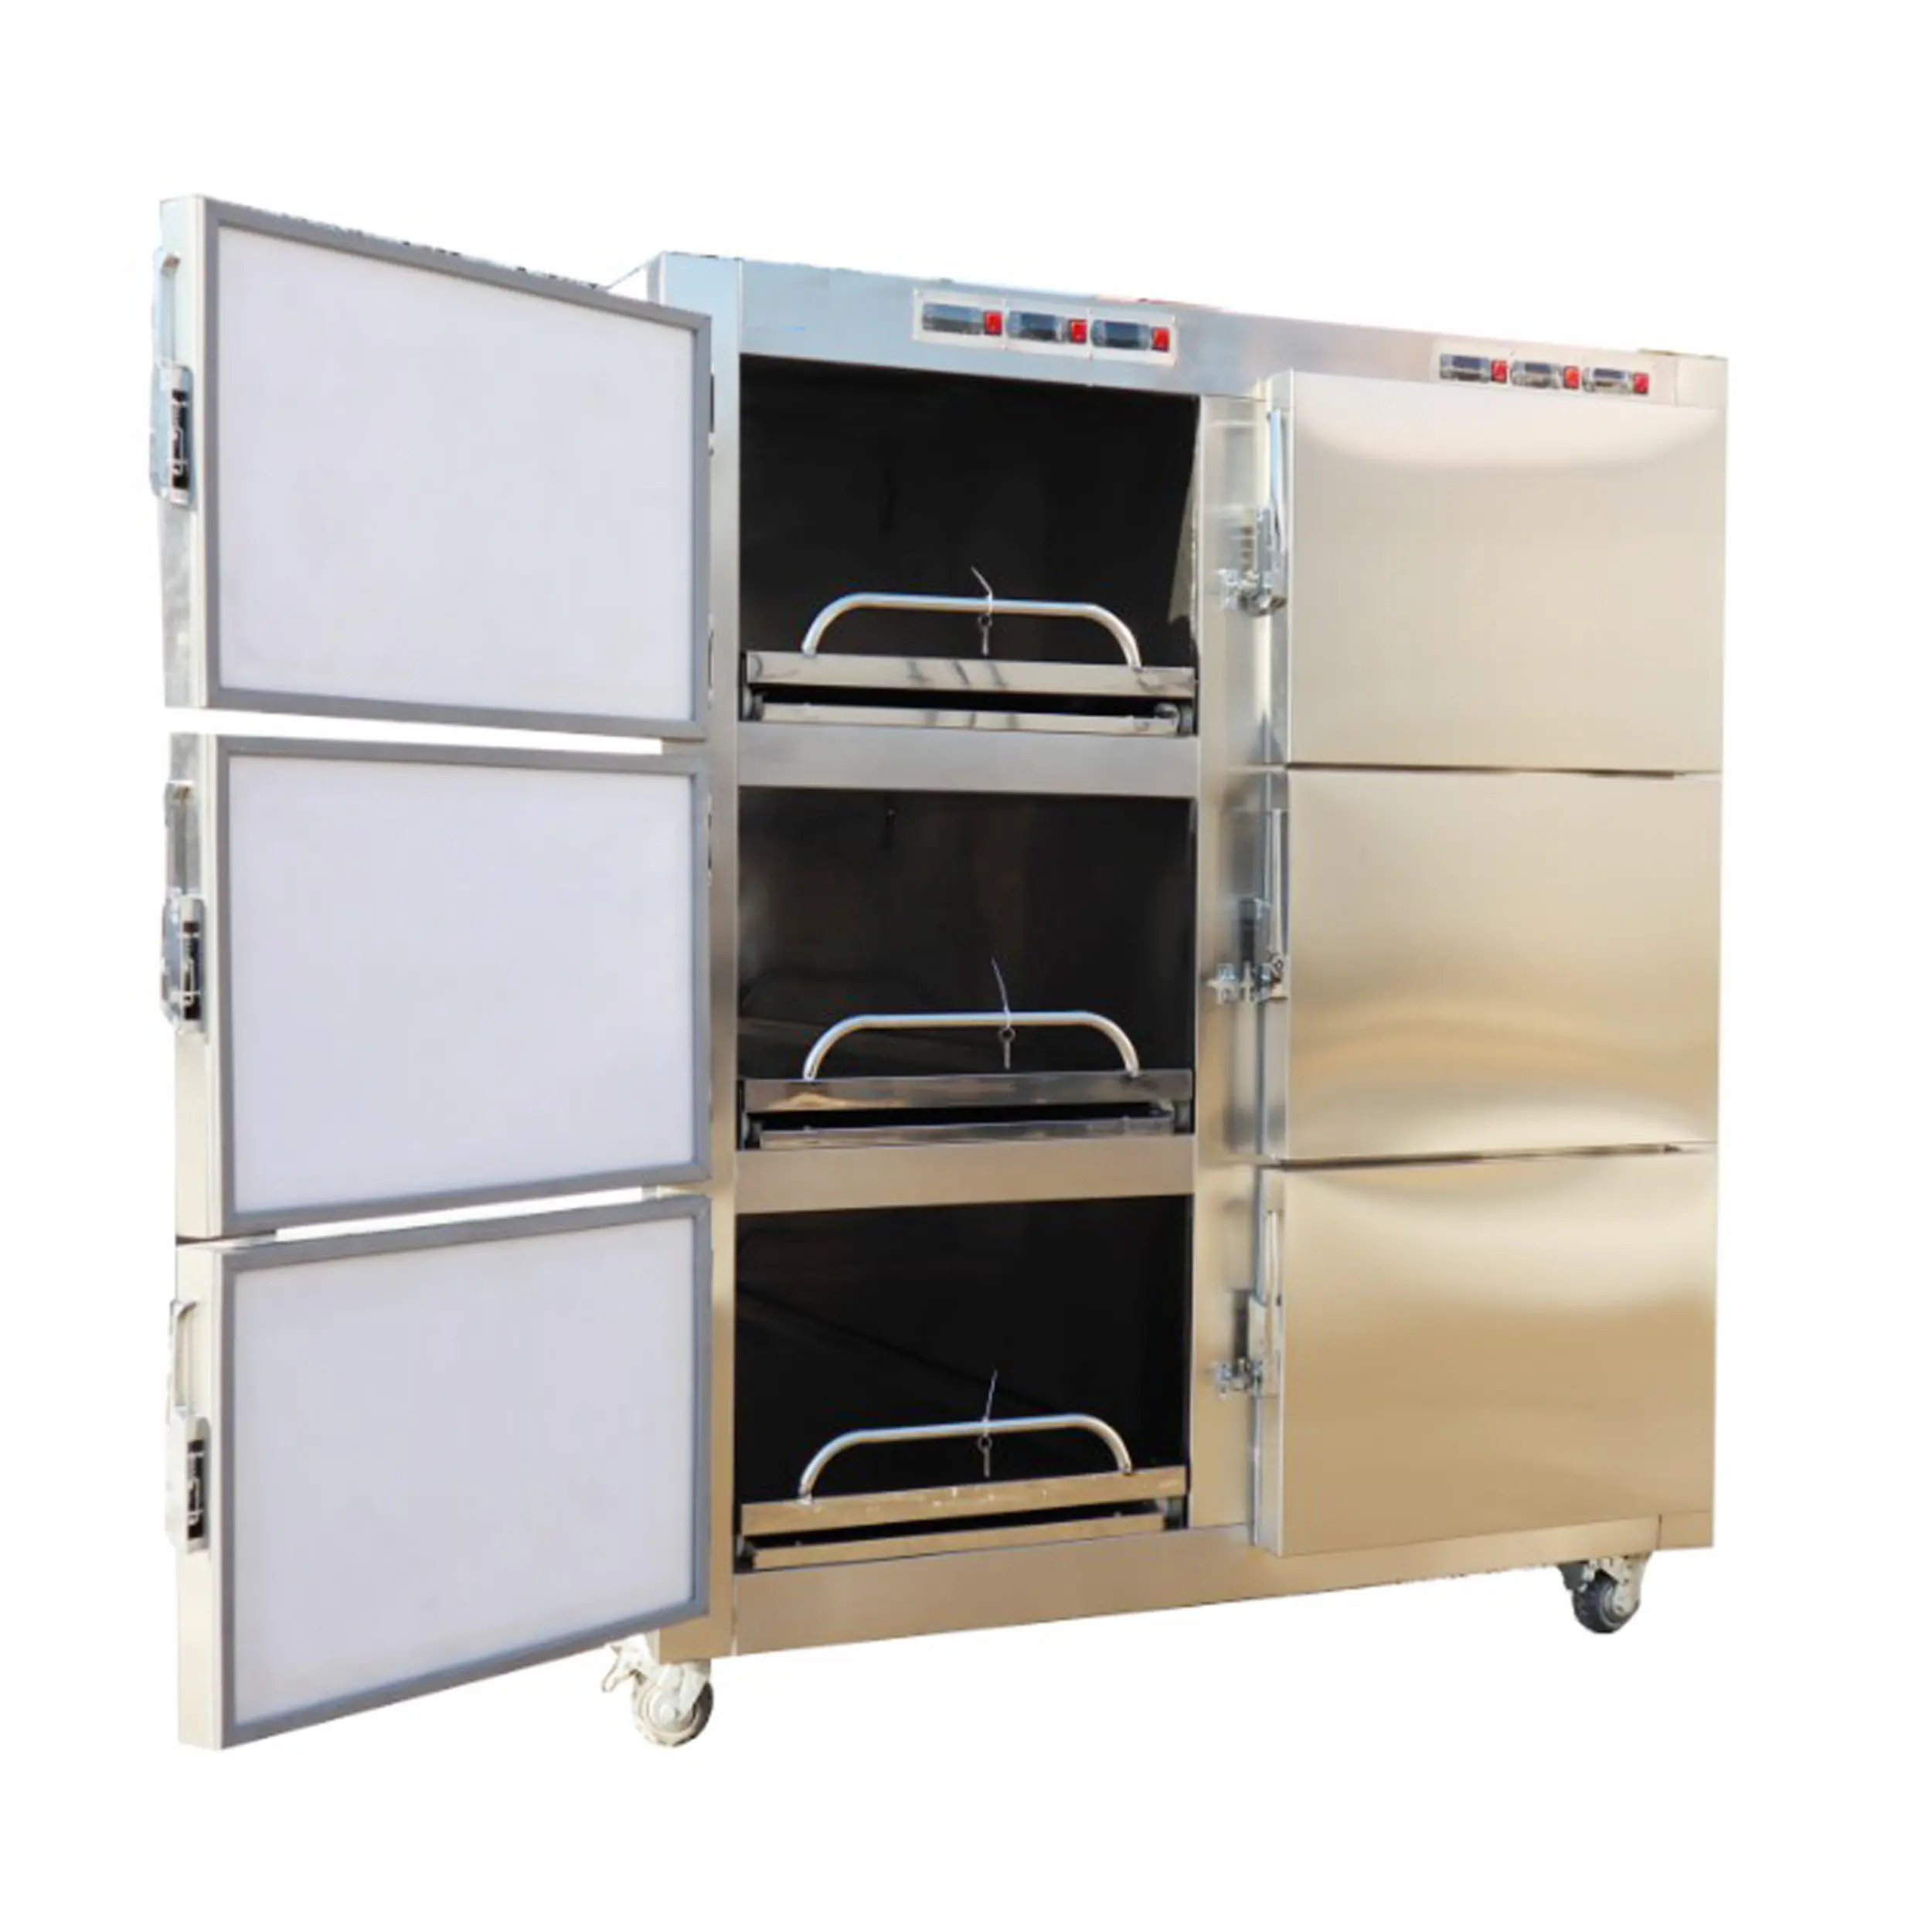 Six Stack Mobile Morgue Refrigerator or Body Freezer